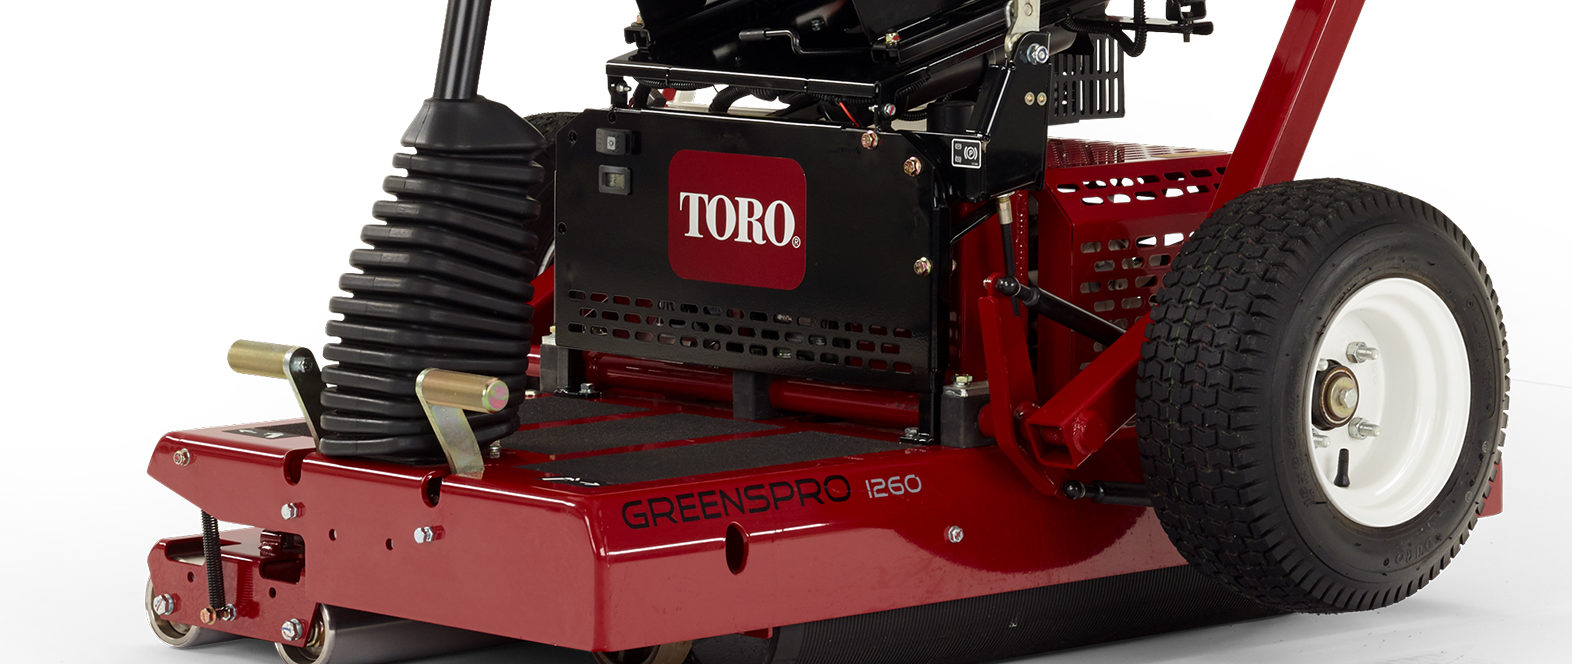 Toro GreensPro 1260